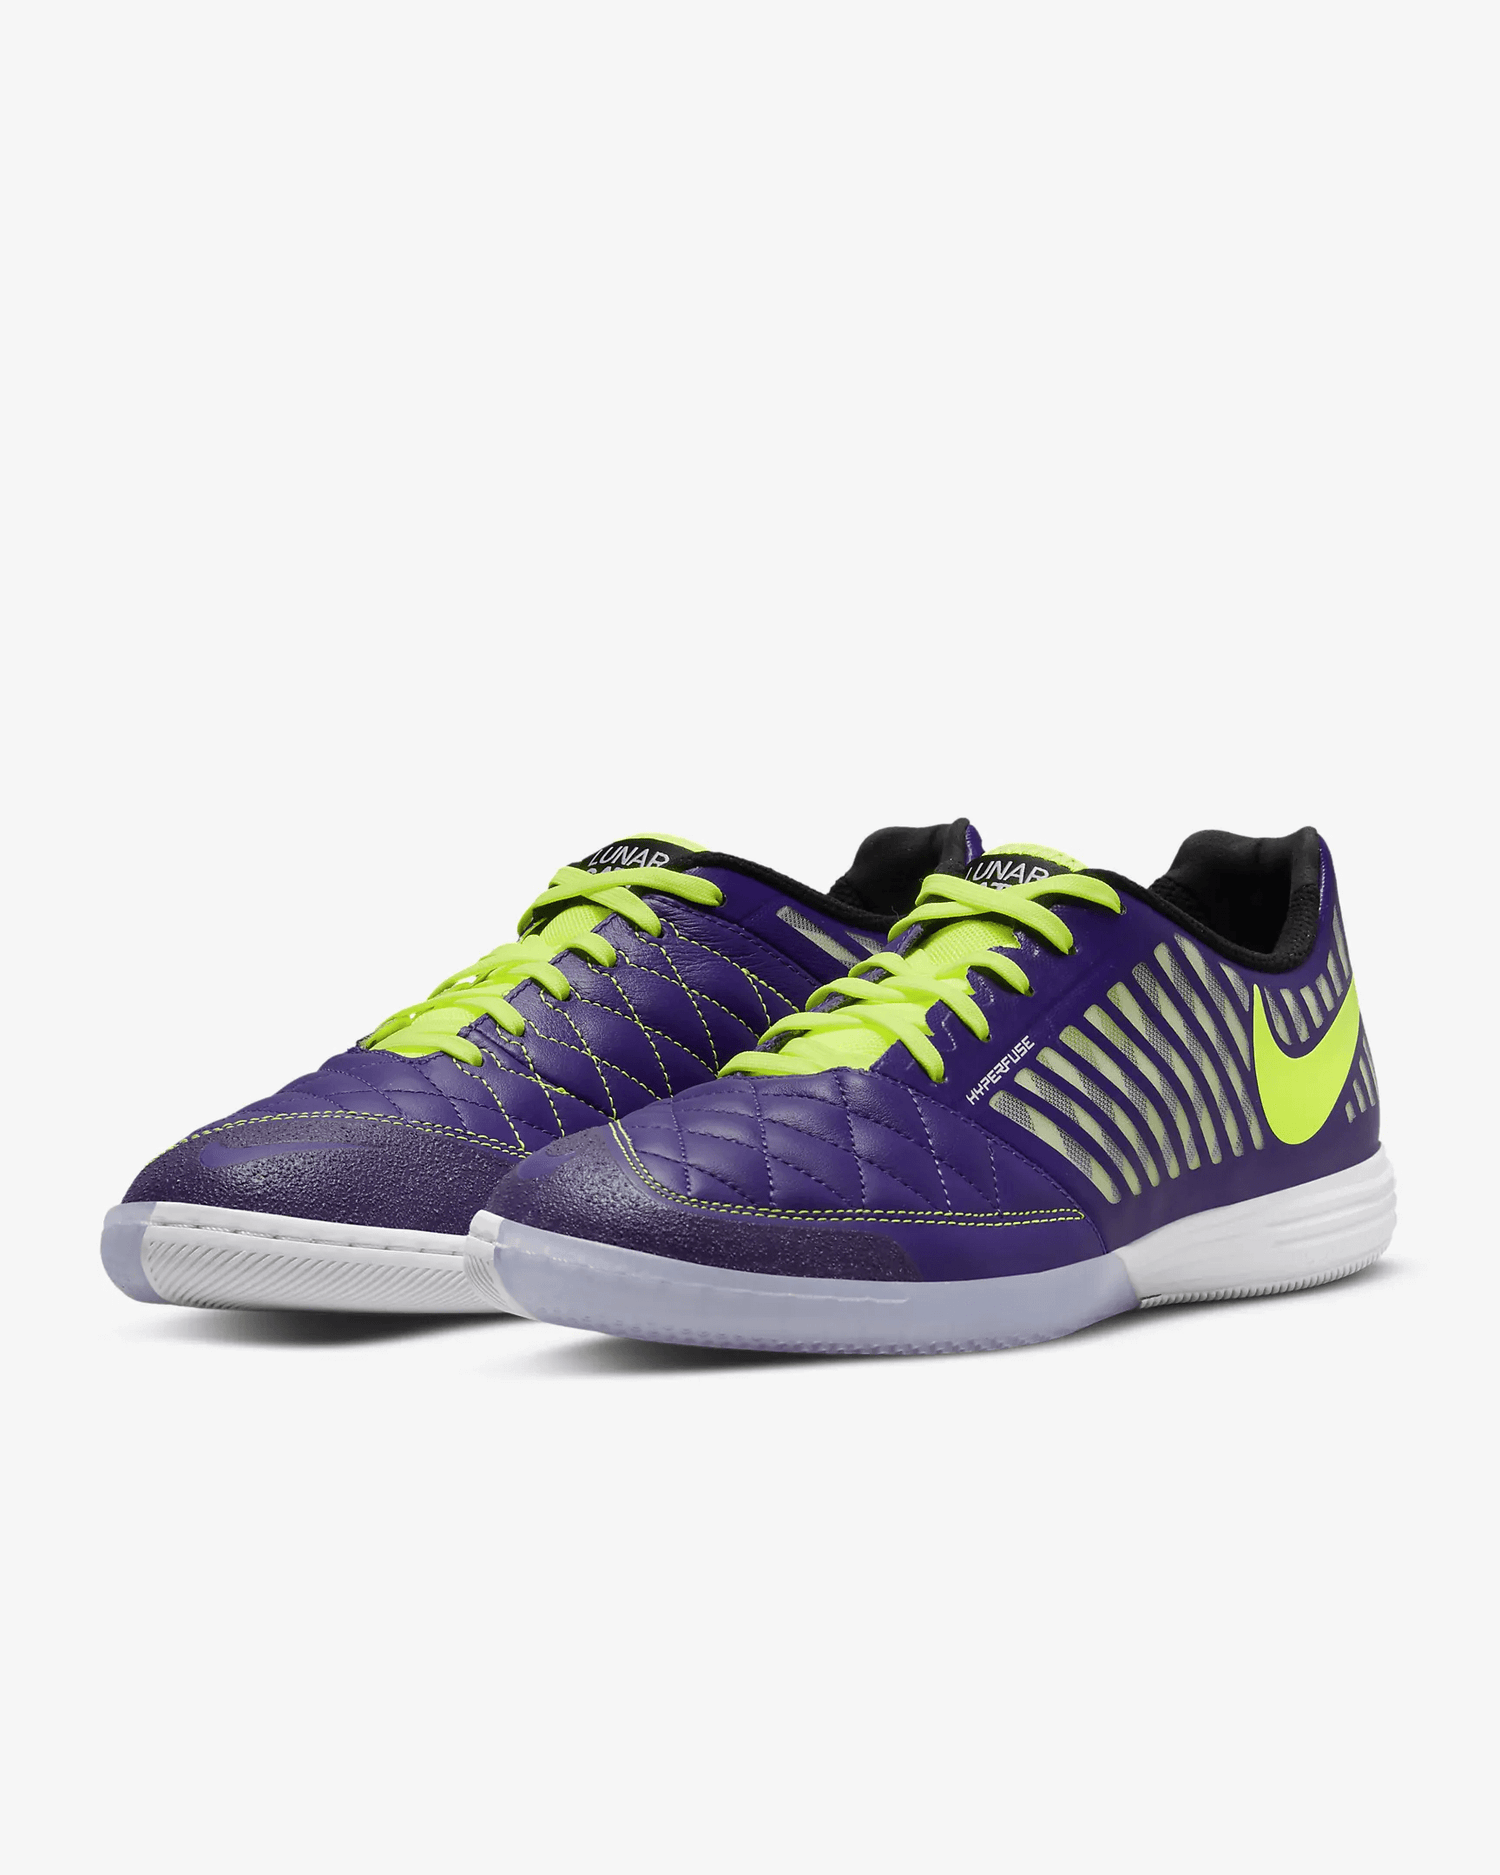 Nike Lunar Gato II Indoor - Purple-Volt (Pair - Diagonal)